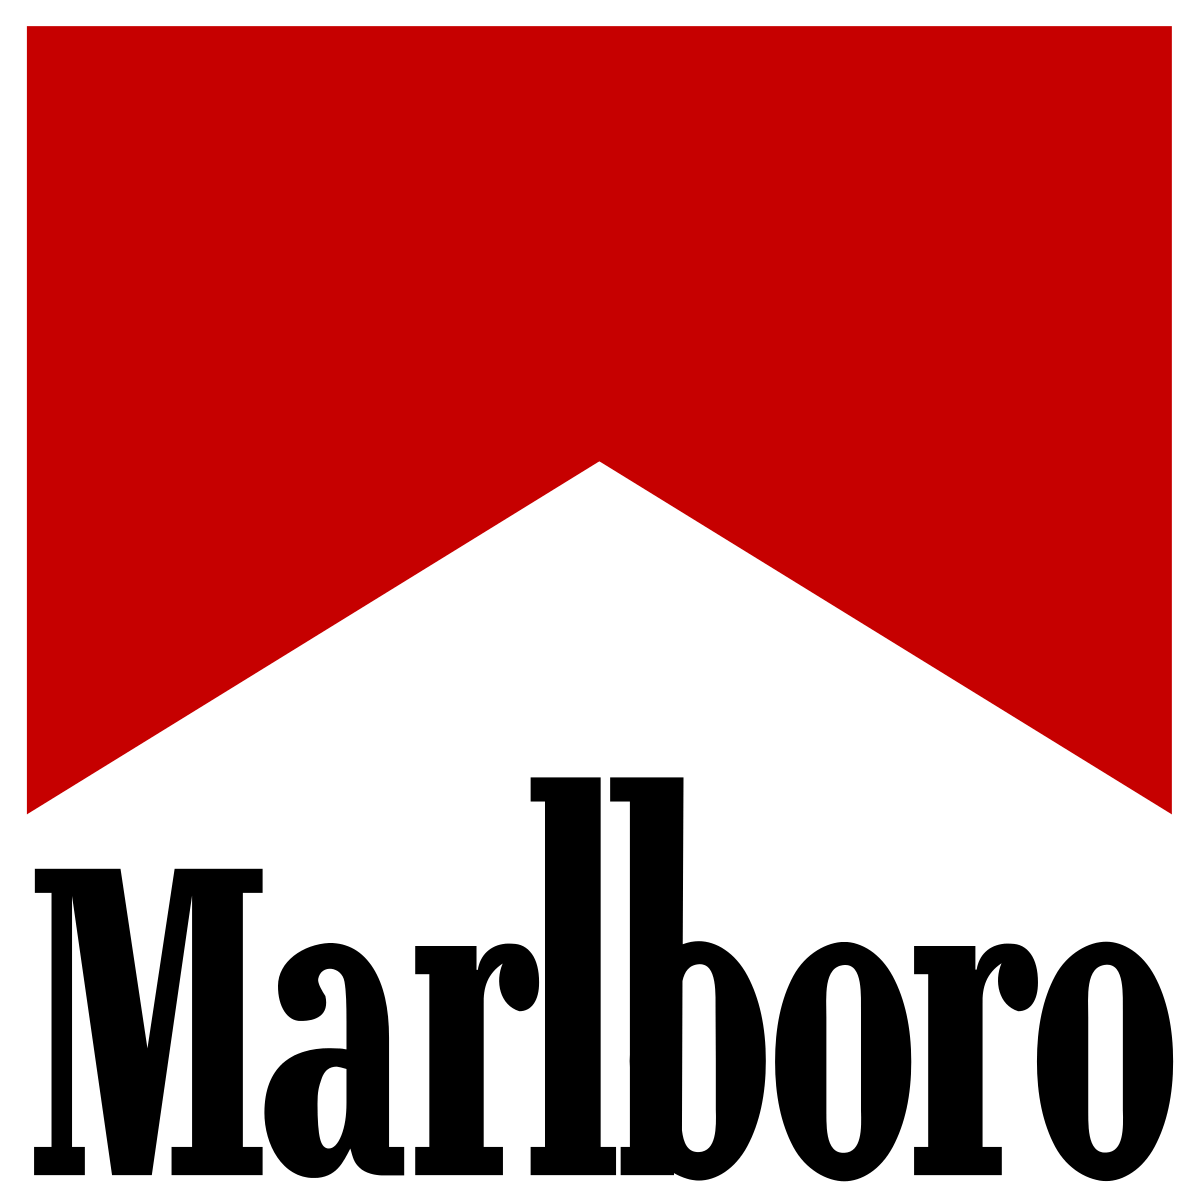 Black and Red Roof Logo - Marlboro (cigarette)